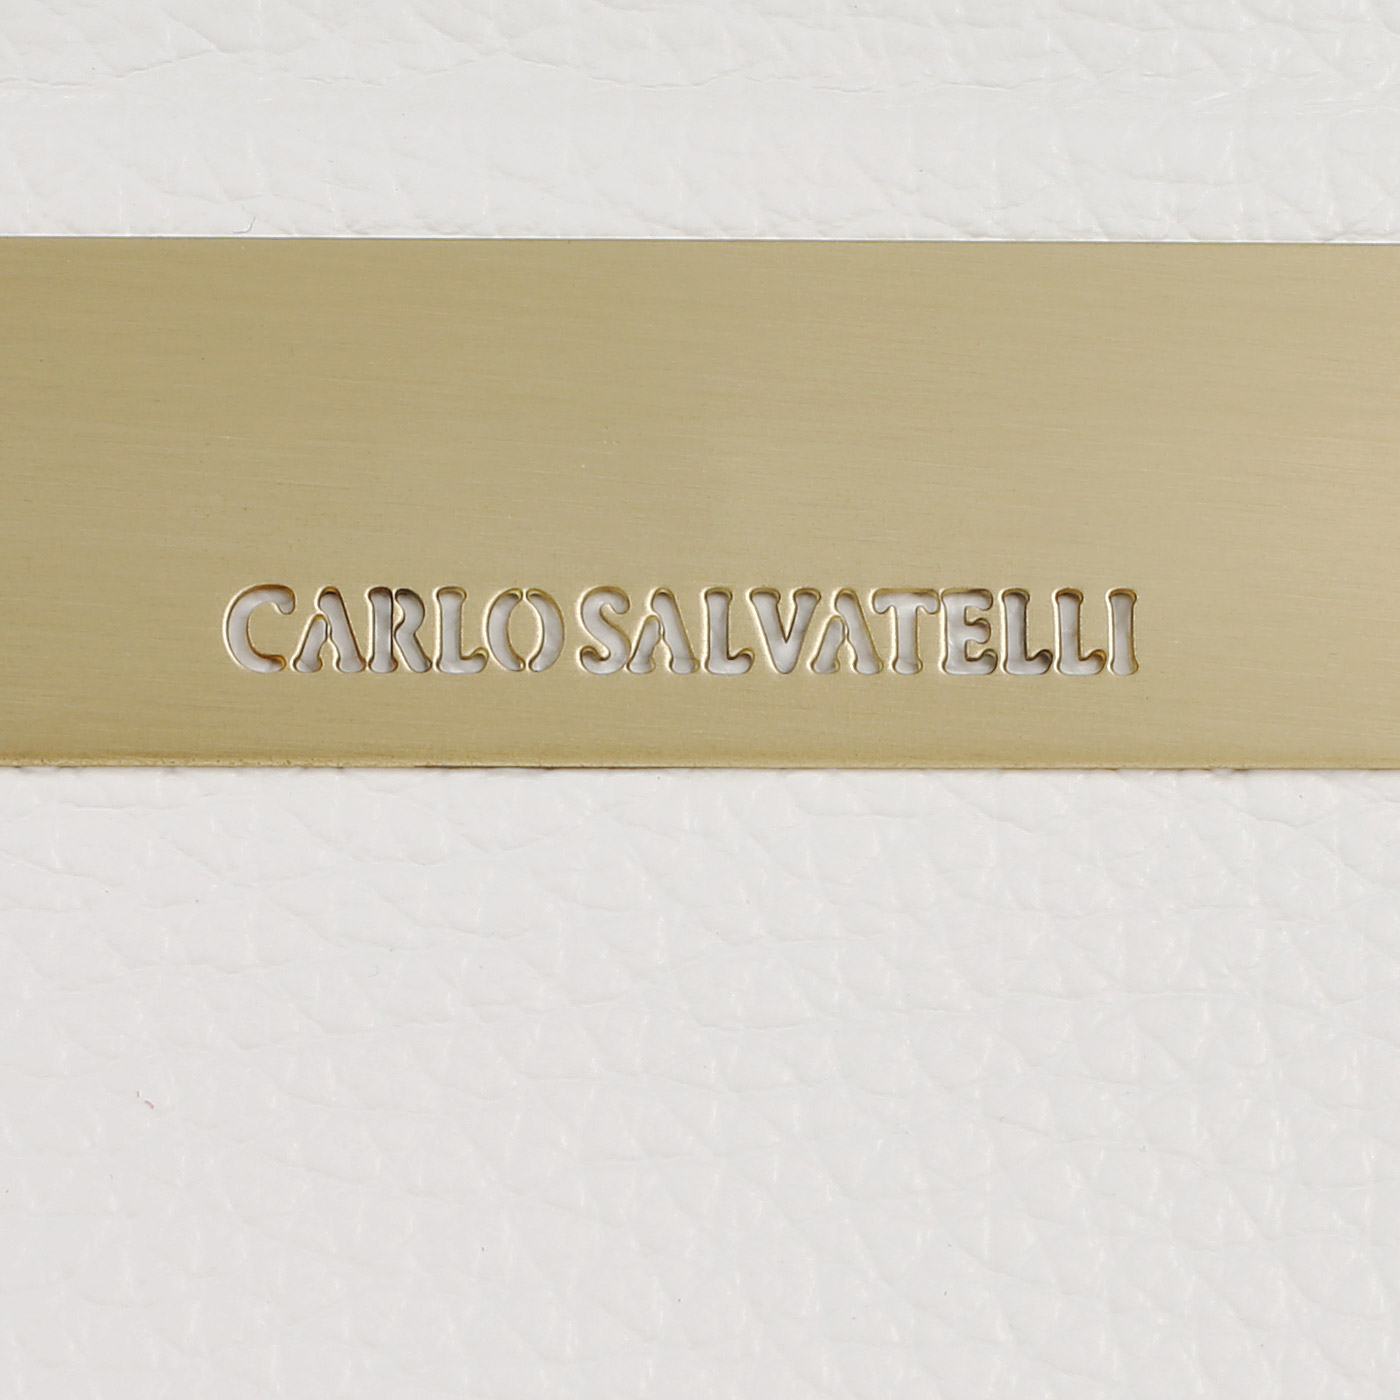 Зернистая кожаная сумка Carlo Salvatelli Cervino